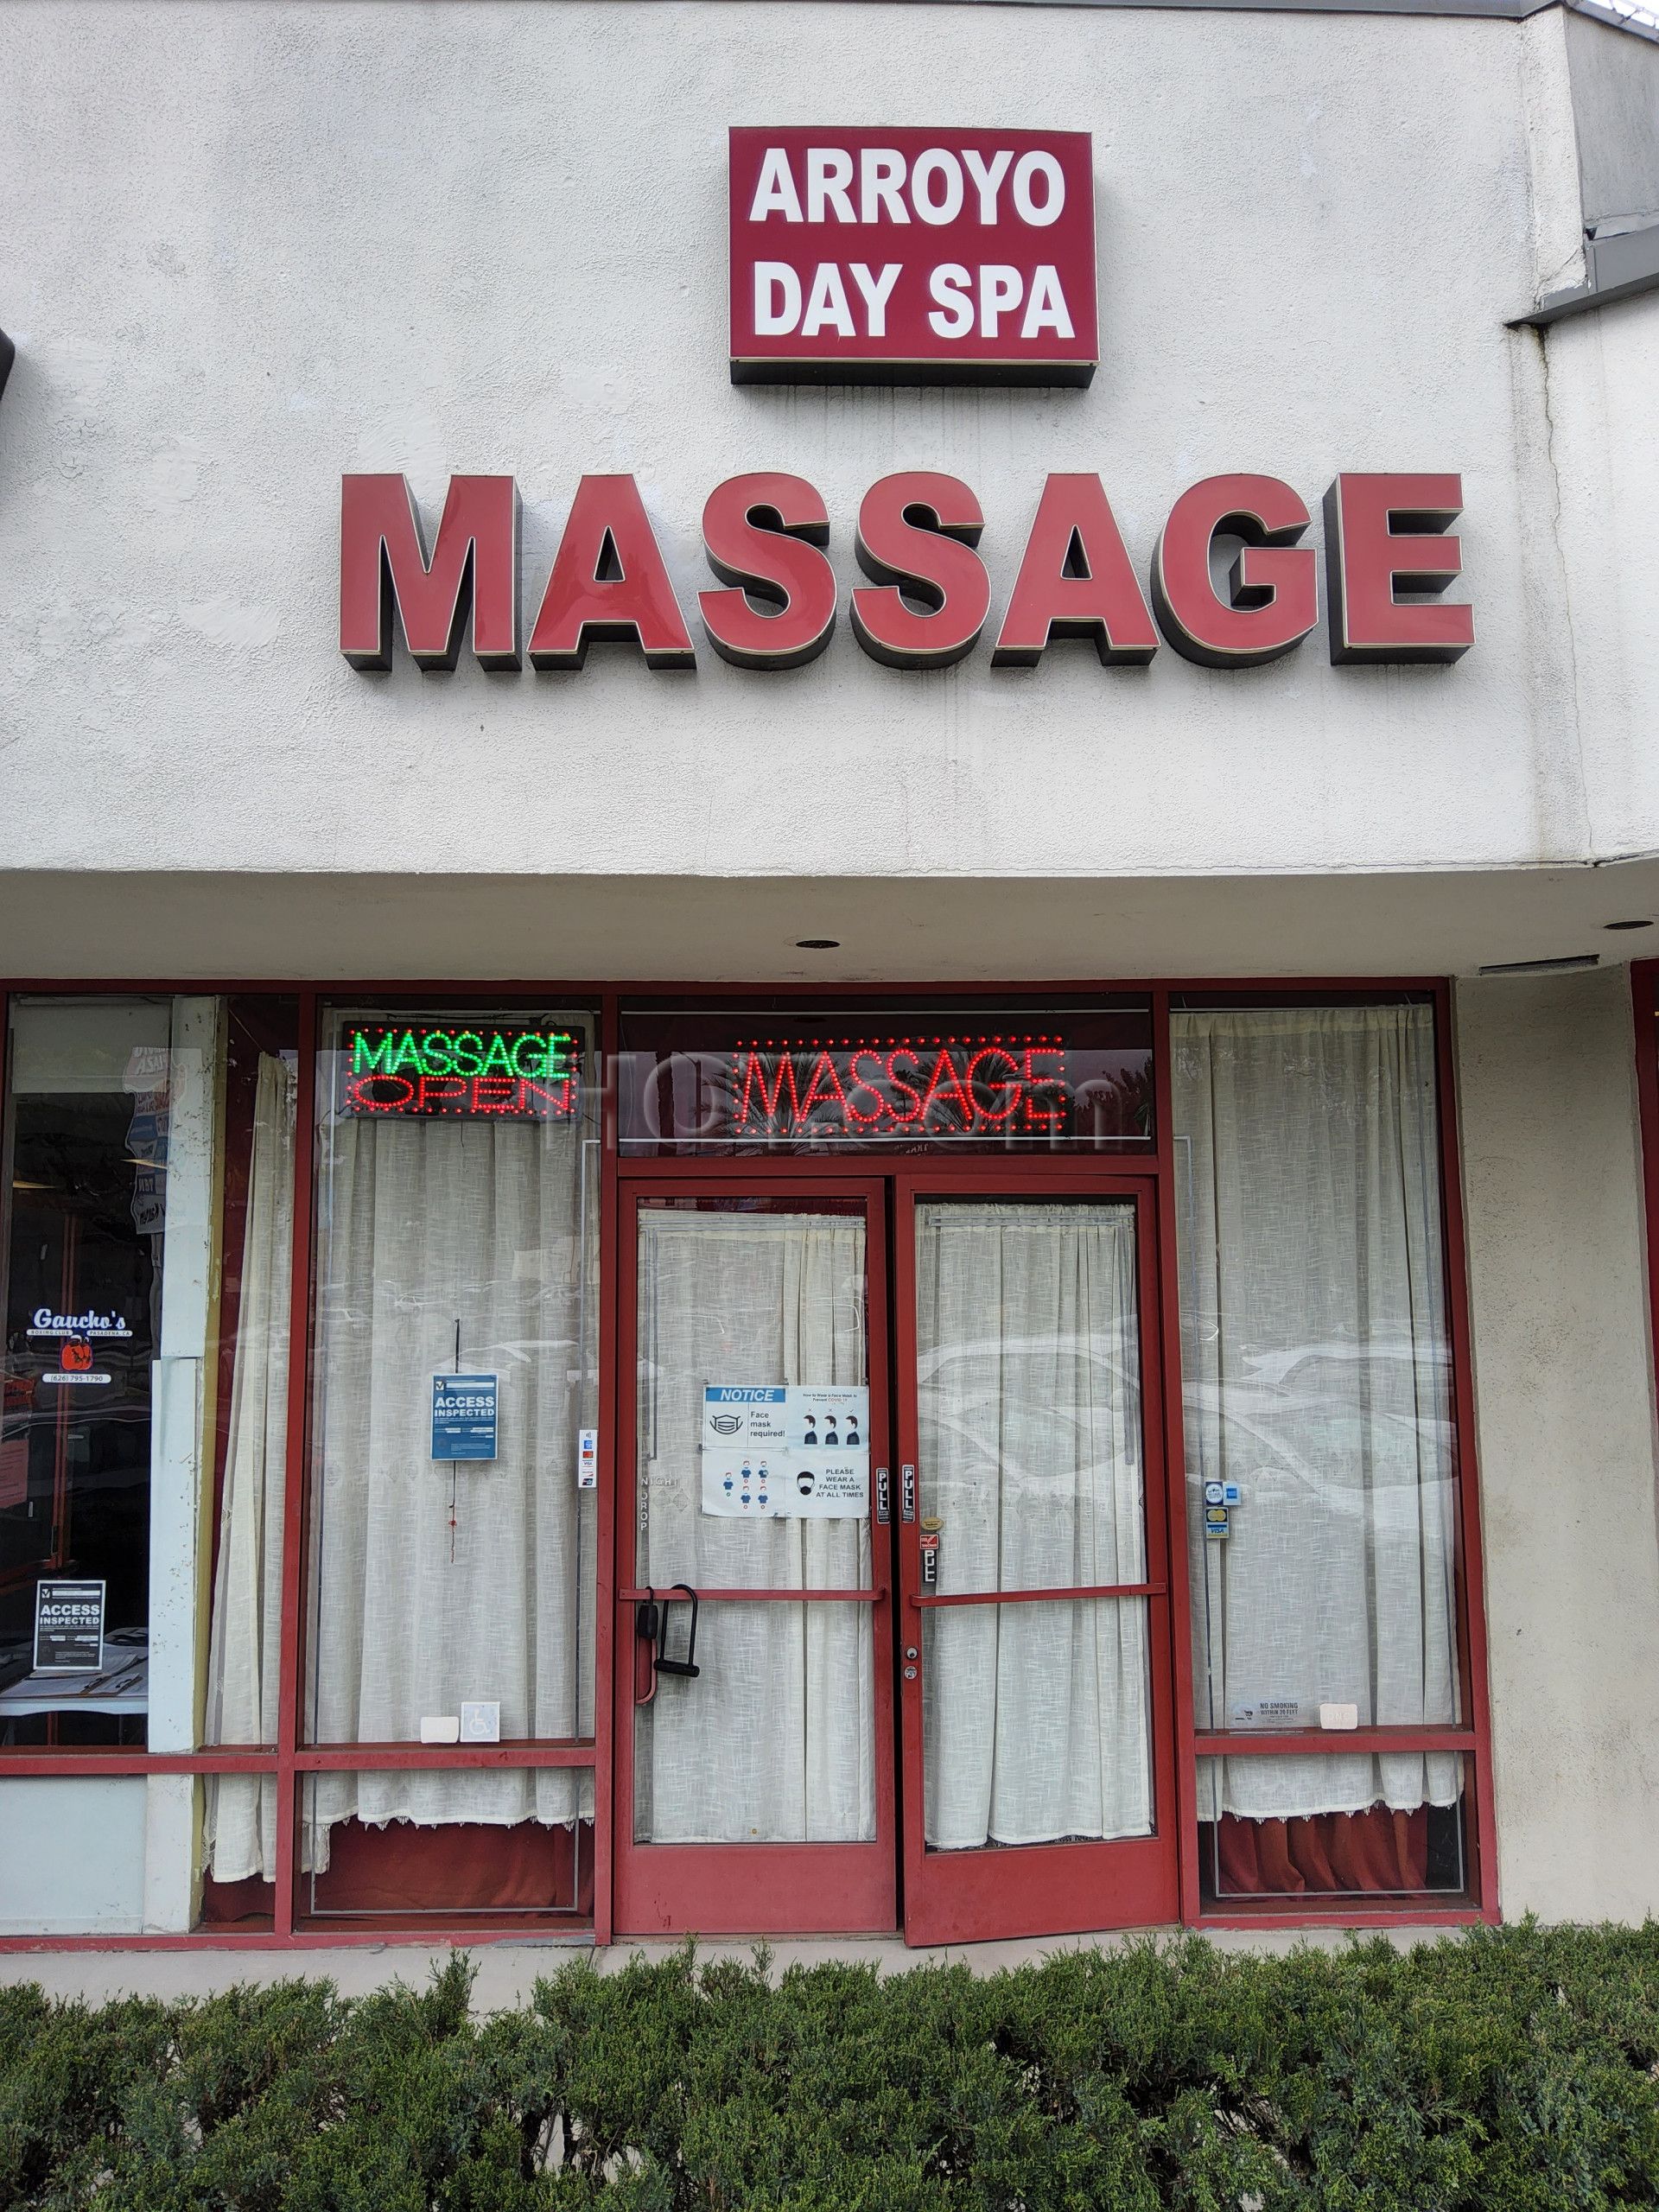 Pasadena, California Arroyo Day Spa and Massage